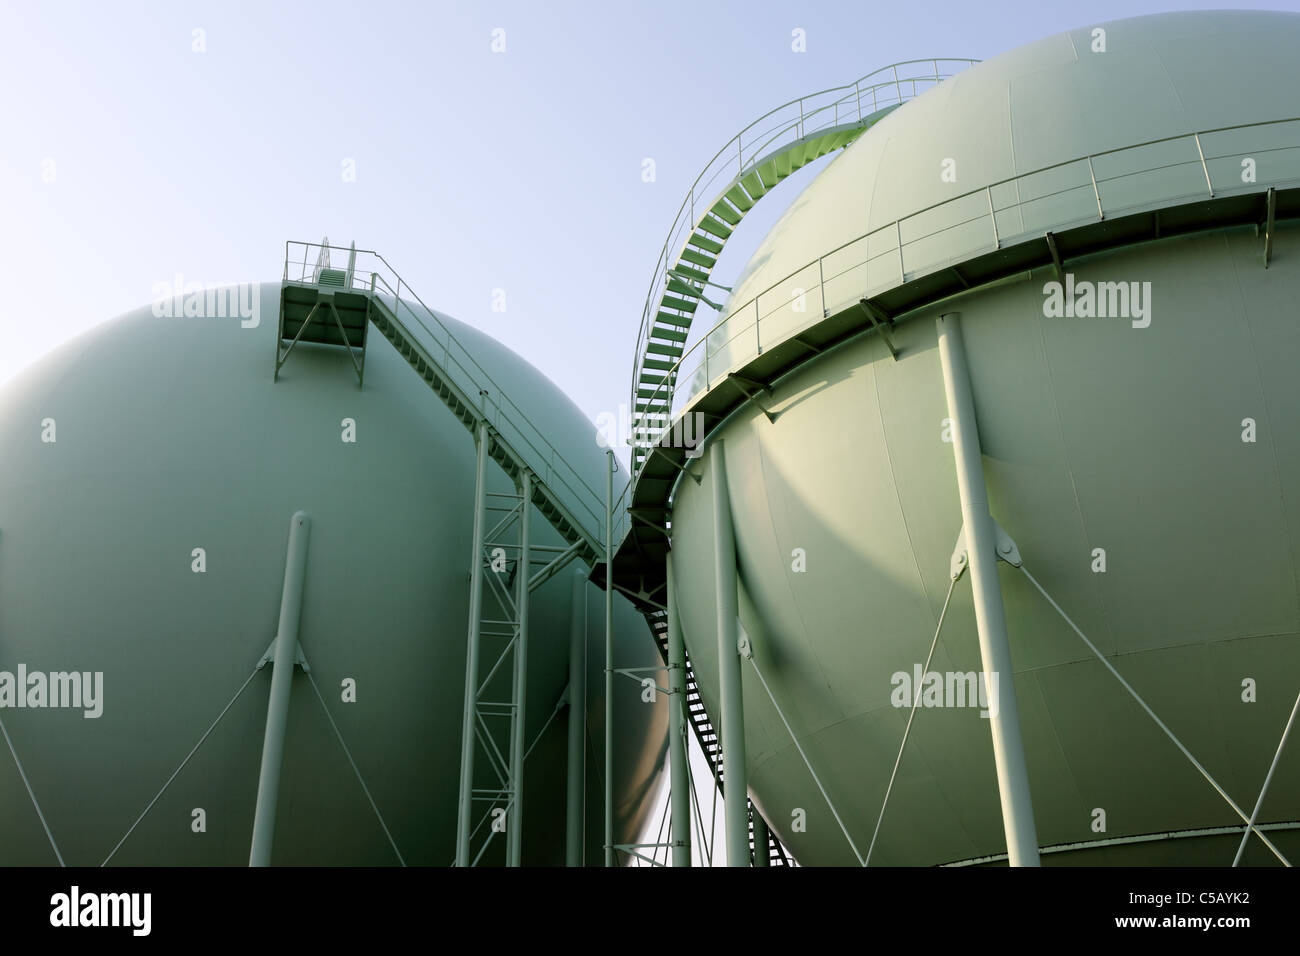 https://c8.alamy.com/comp/C5AYK2/storage-tank-in-a-chemical-plant-C5AYK2.jpg